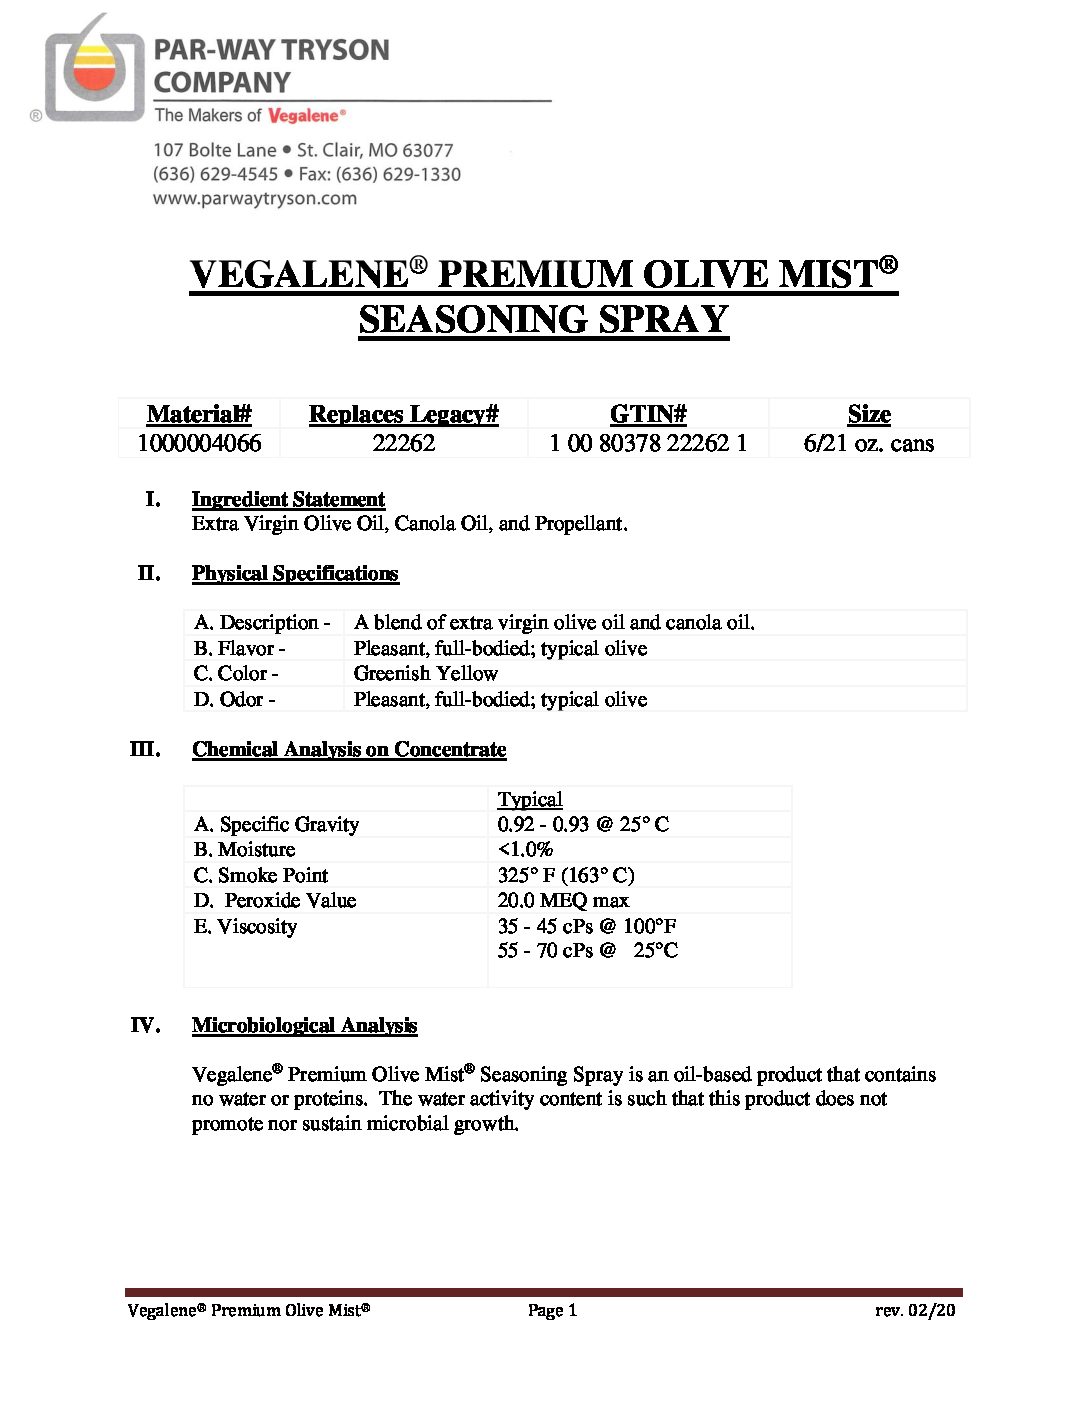 PDS – 1000004066 (22262) – Vegalene Premium Olive Mist 2020